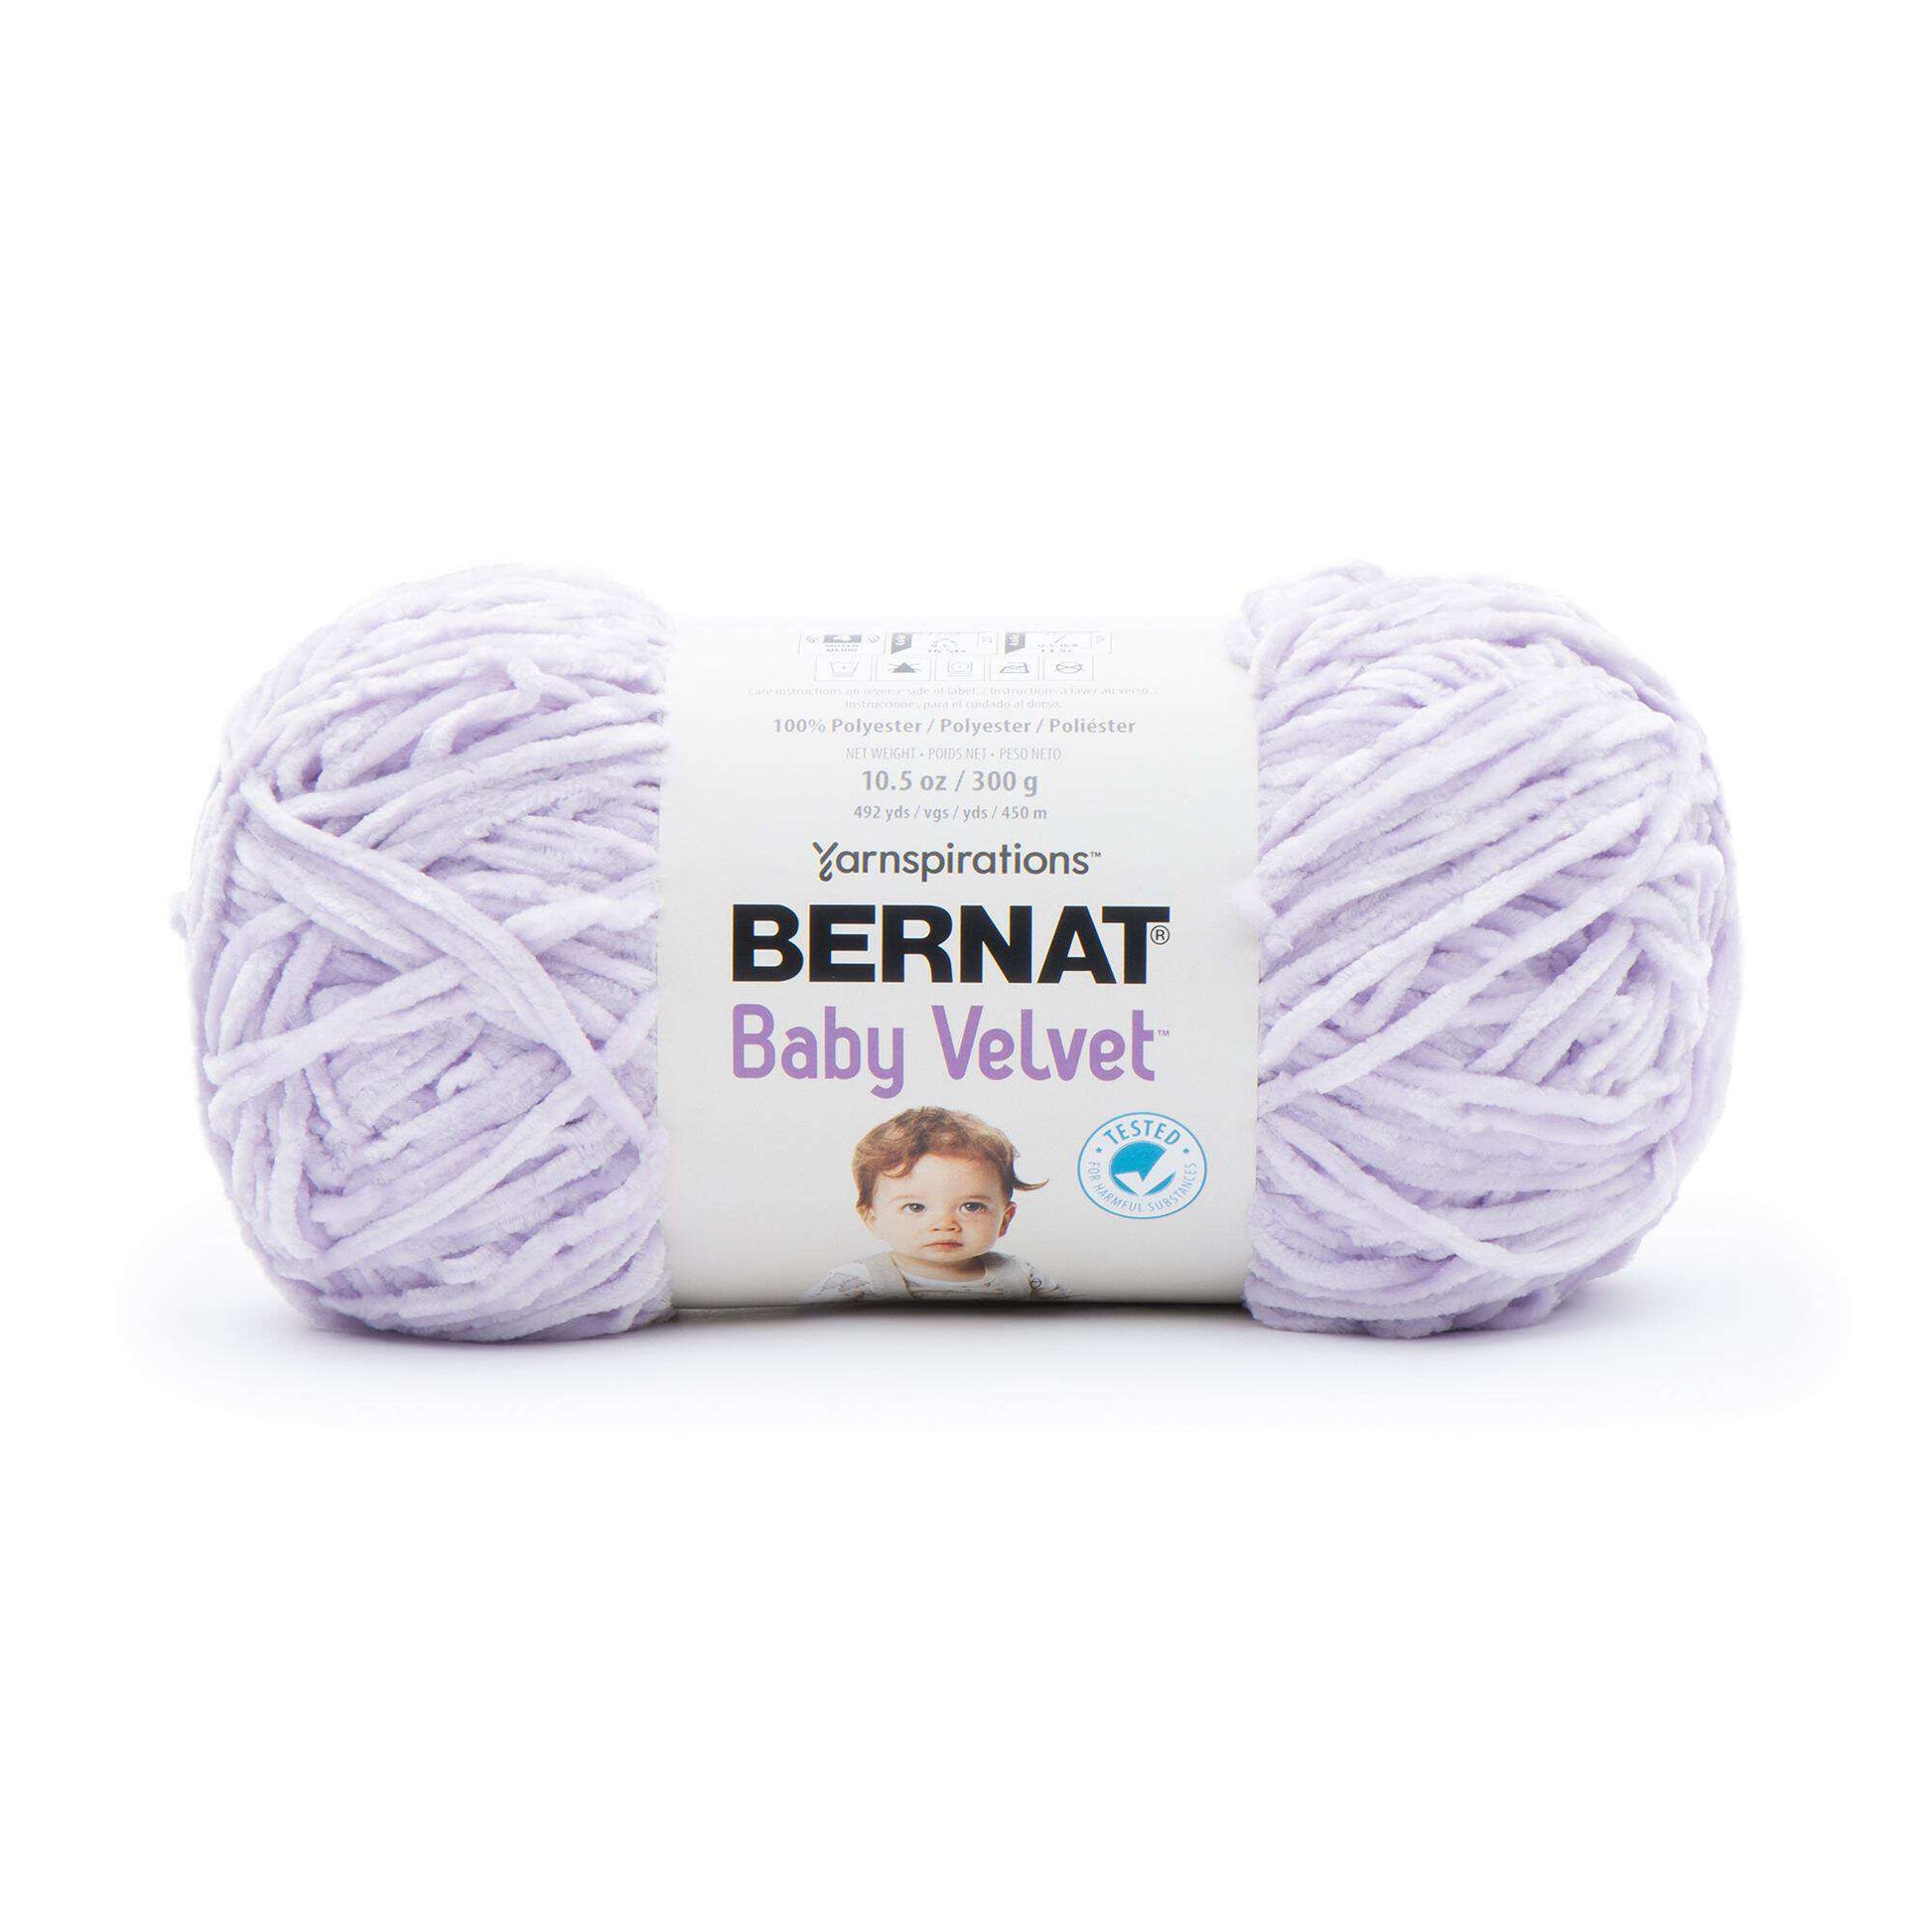 Bernat Baby Velvet Yarn (300g/10.5oz) - Discontinued Shades